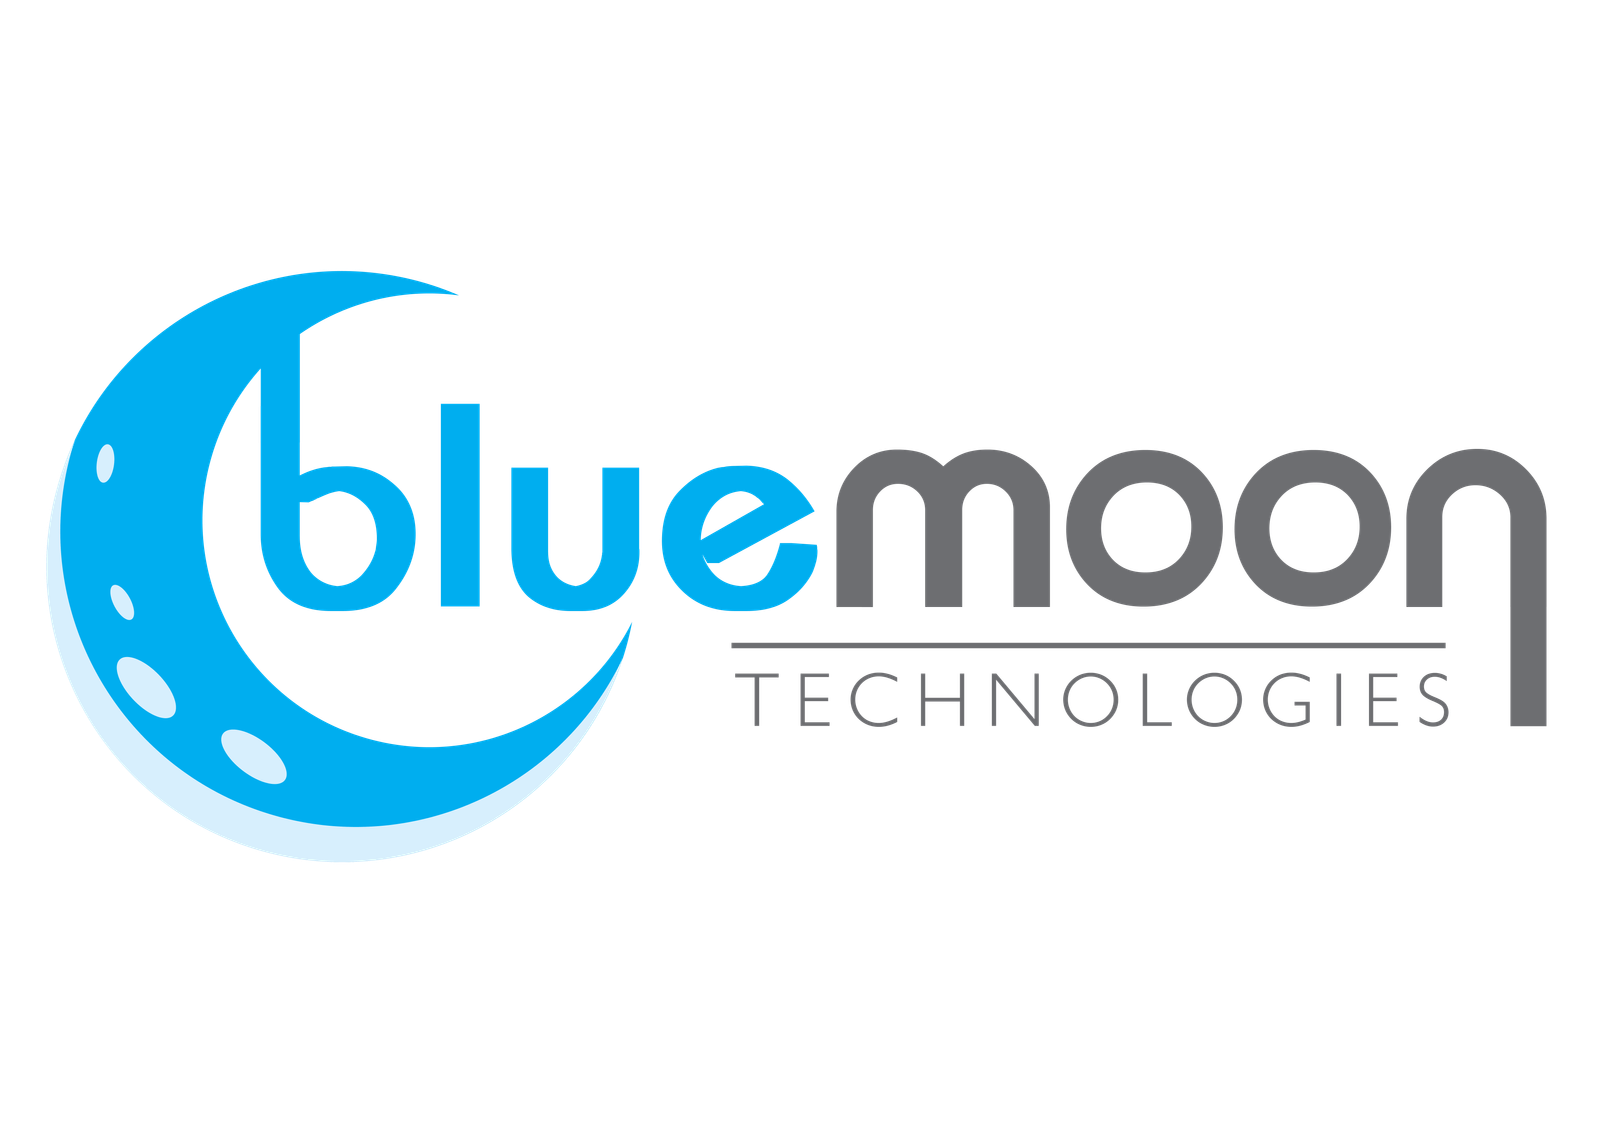 Bluemoon Technologies